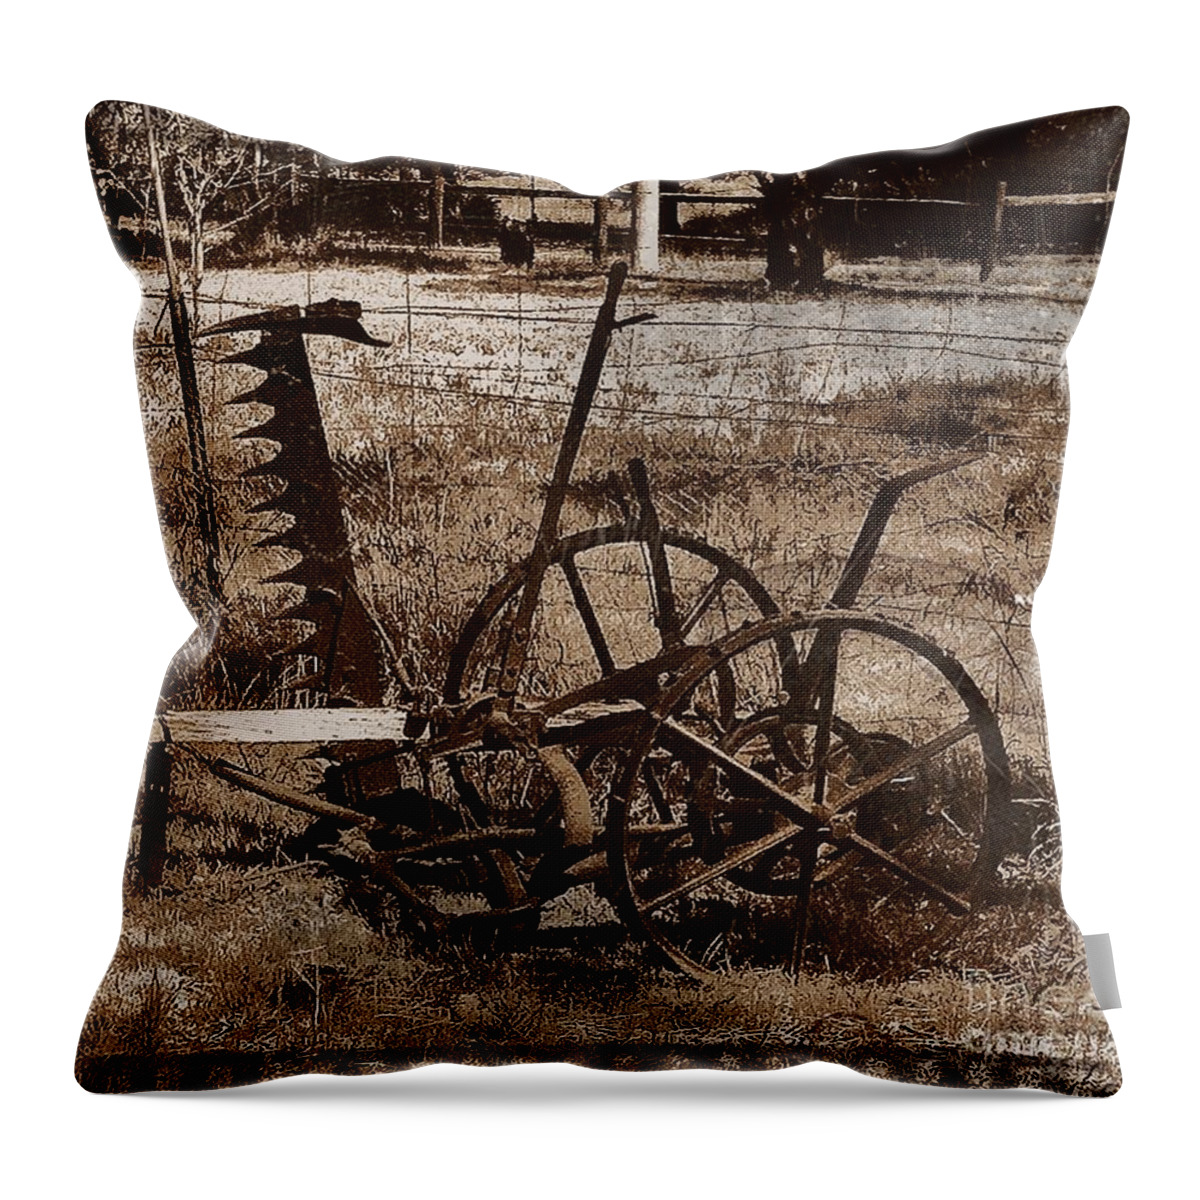 Australia Throw Pillow featuring the photograph Old Farm Equipment by Blair Stuart